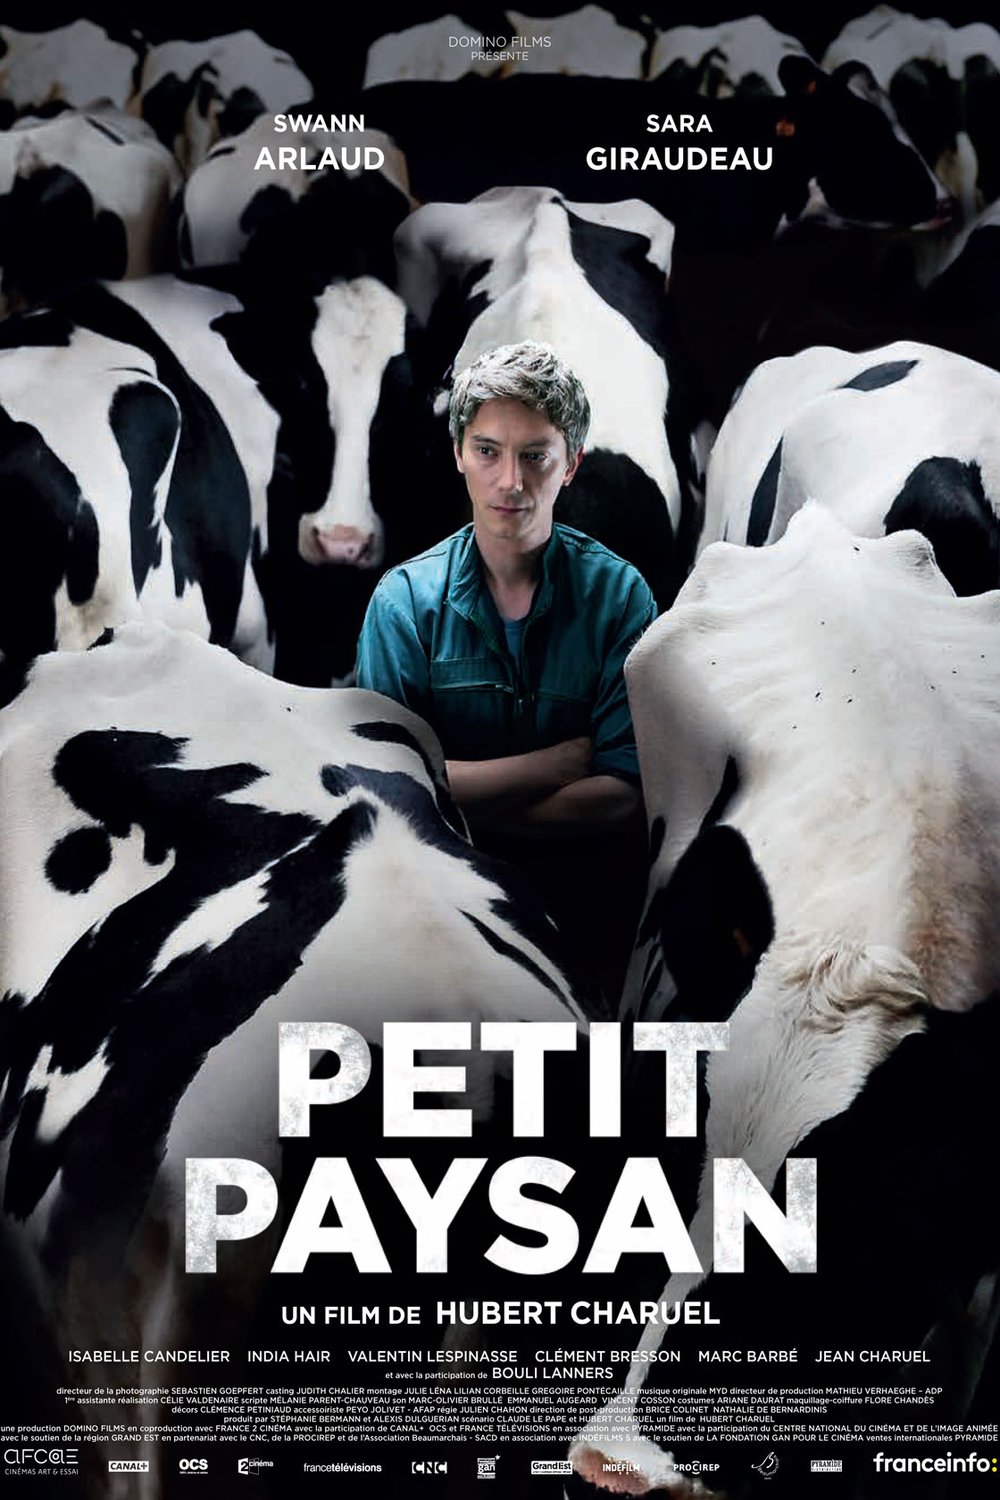 Poster of the movie Petit paysan